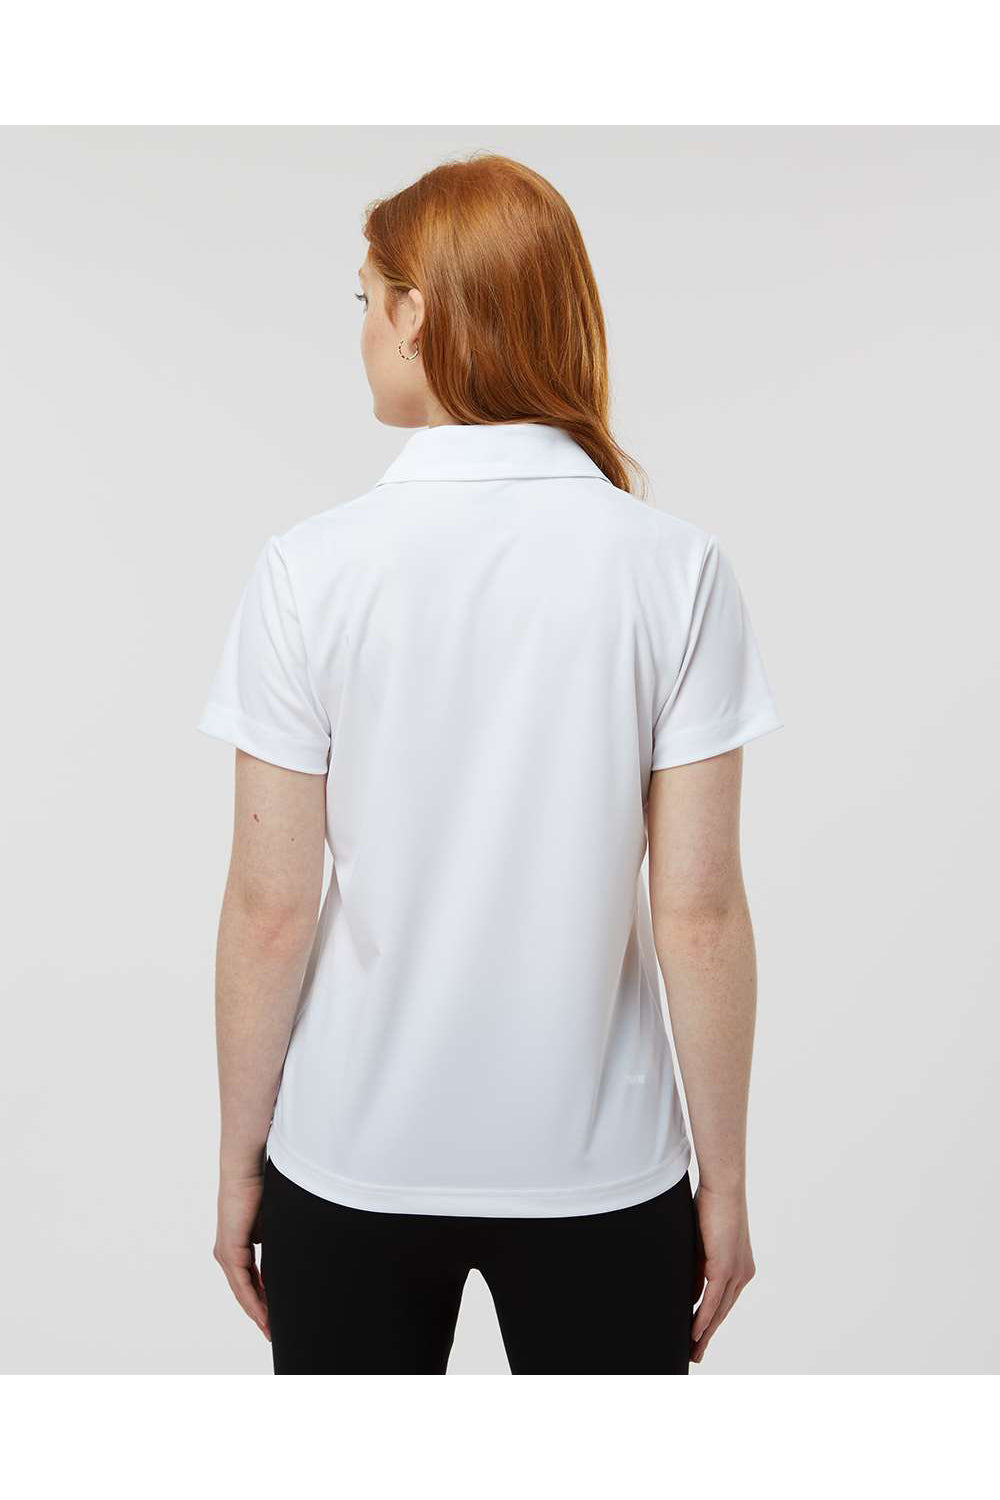 Paragon 504 Womens Sebring Performance Short Sleeve Polo Shirt White Model Back